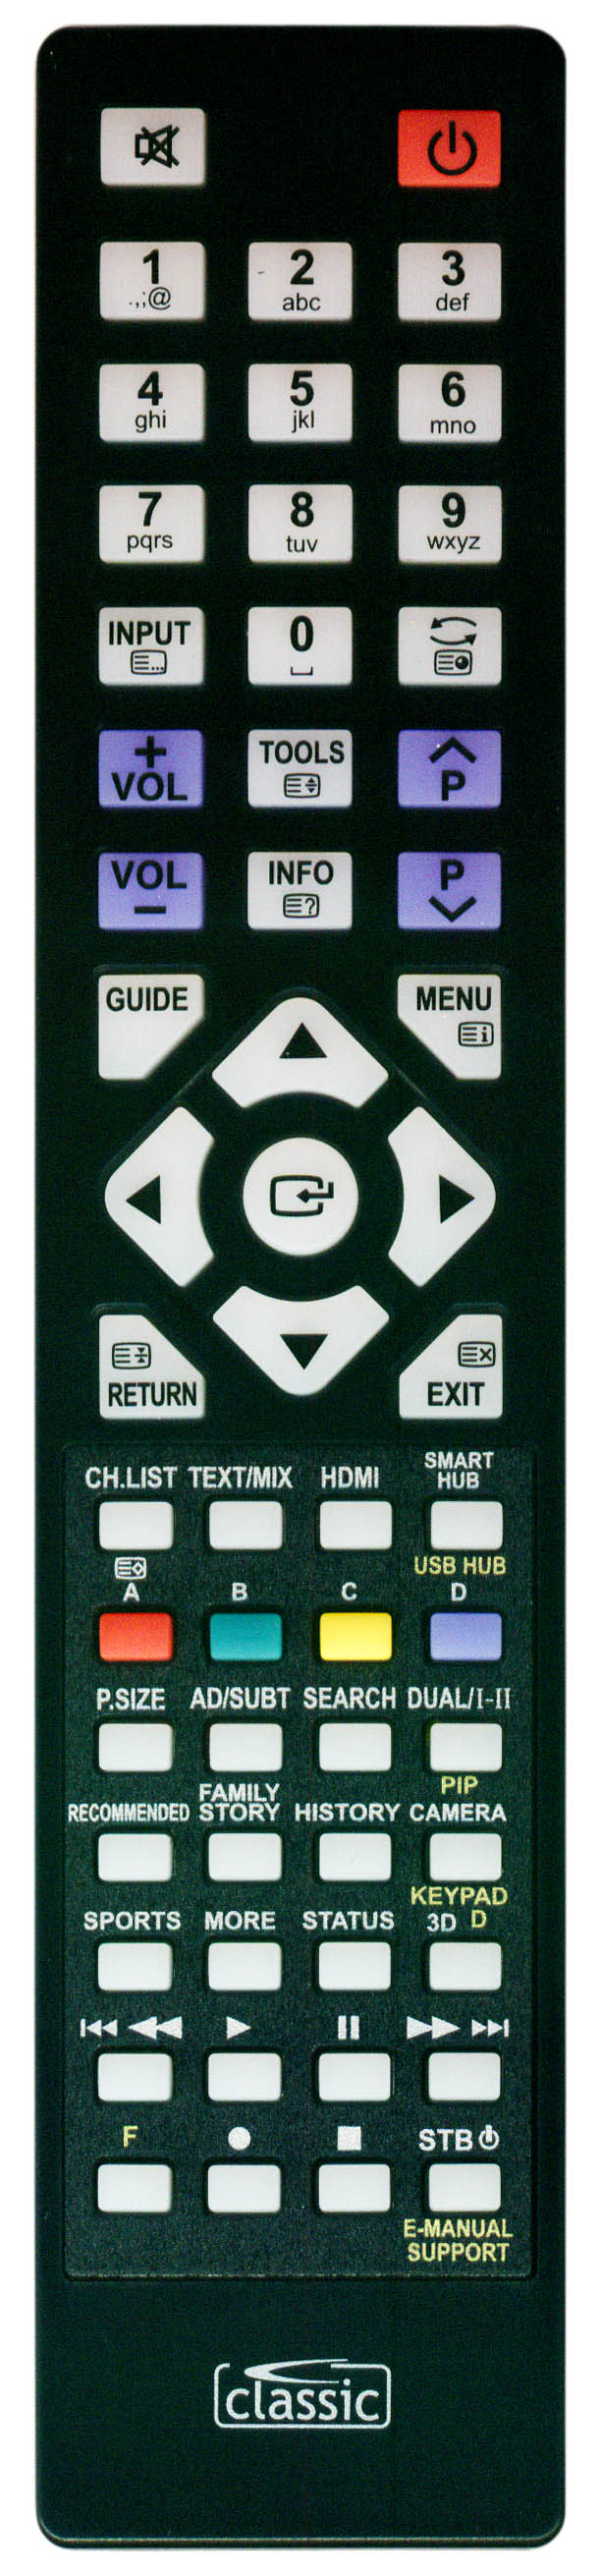 Samsung UE48H6800AUXKZ Remote Control